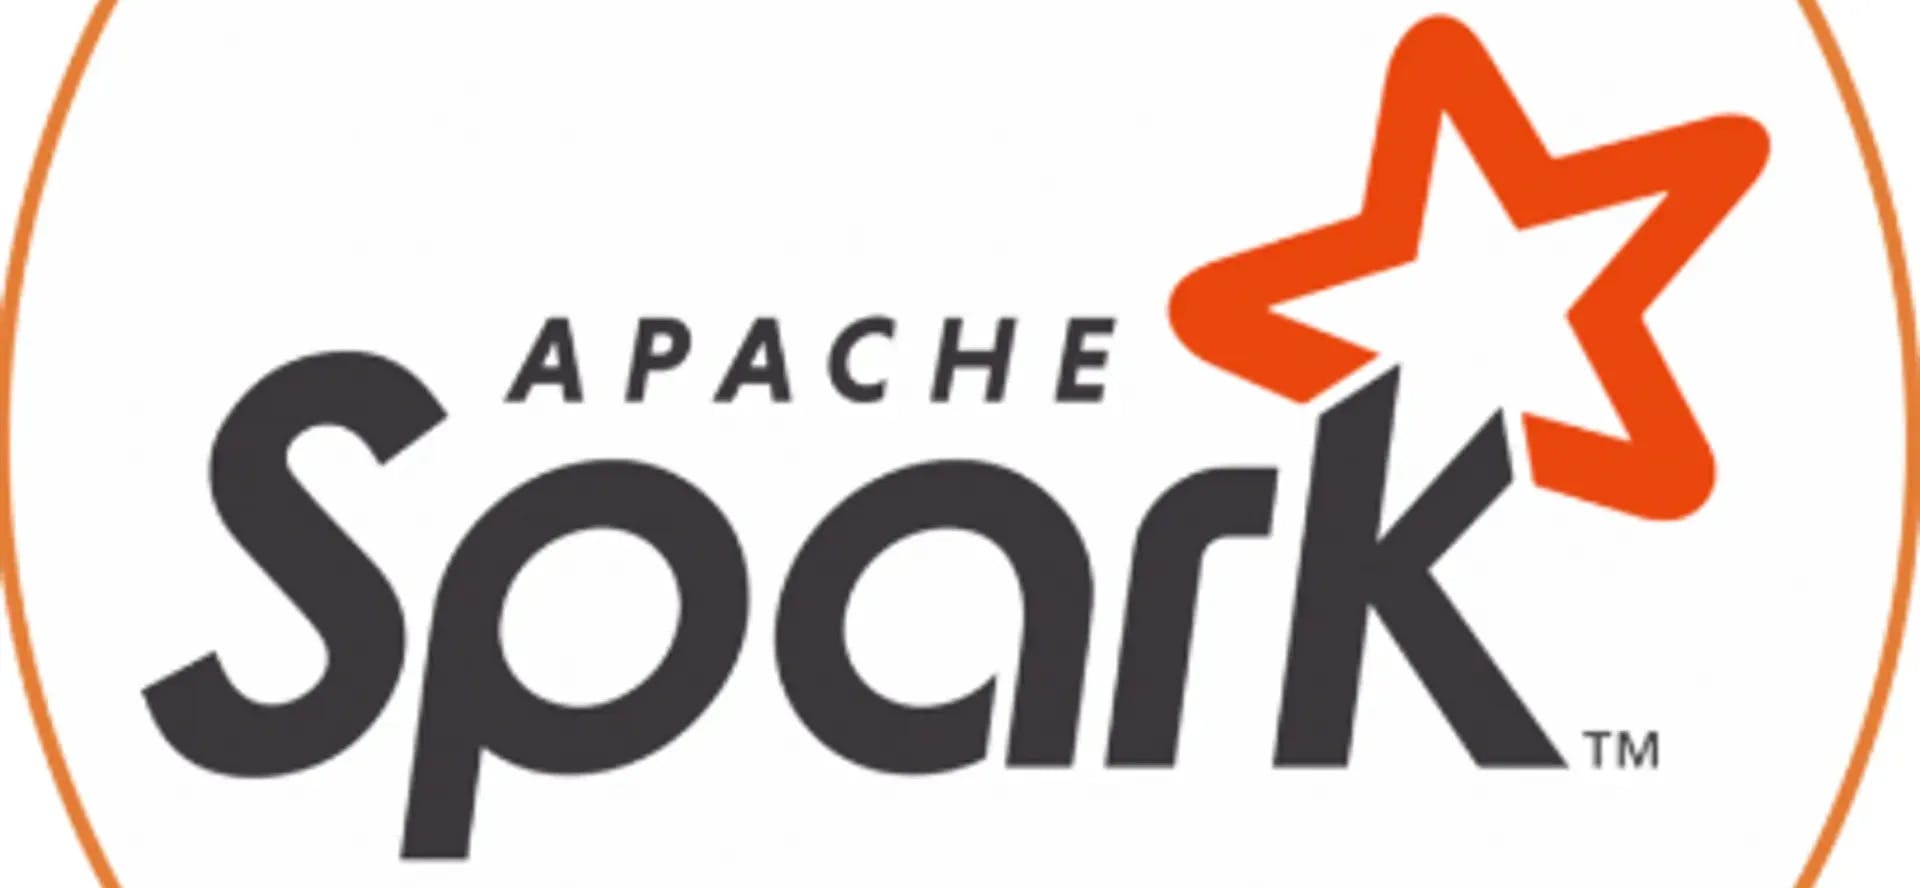 How to install Apache Spark on Ubuntu?